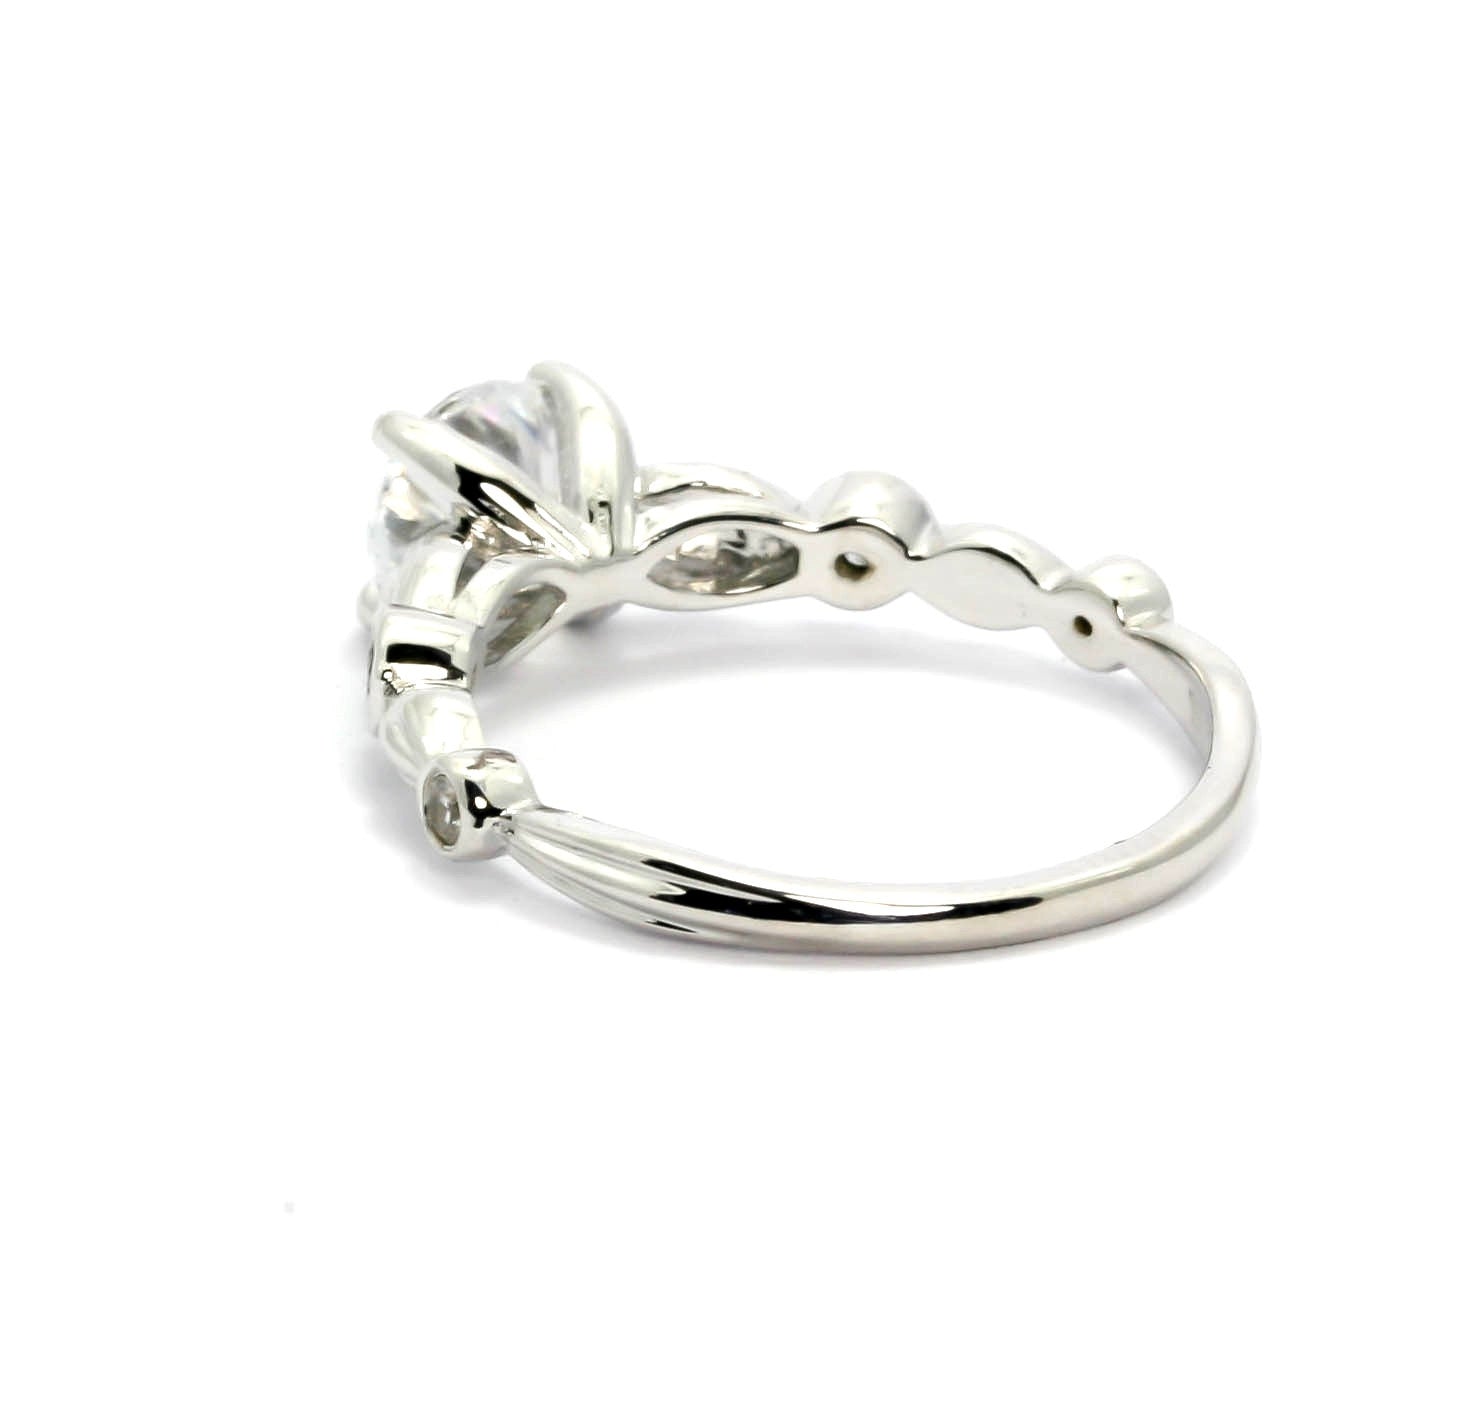 Diamond Engagement Ring, Unique Solitaire .75 Carat GIA Certified Diamond Center Stone & .13 Carat Diamonds Accent Stones, Anniversary Ring - WDY11670SE